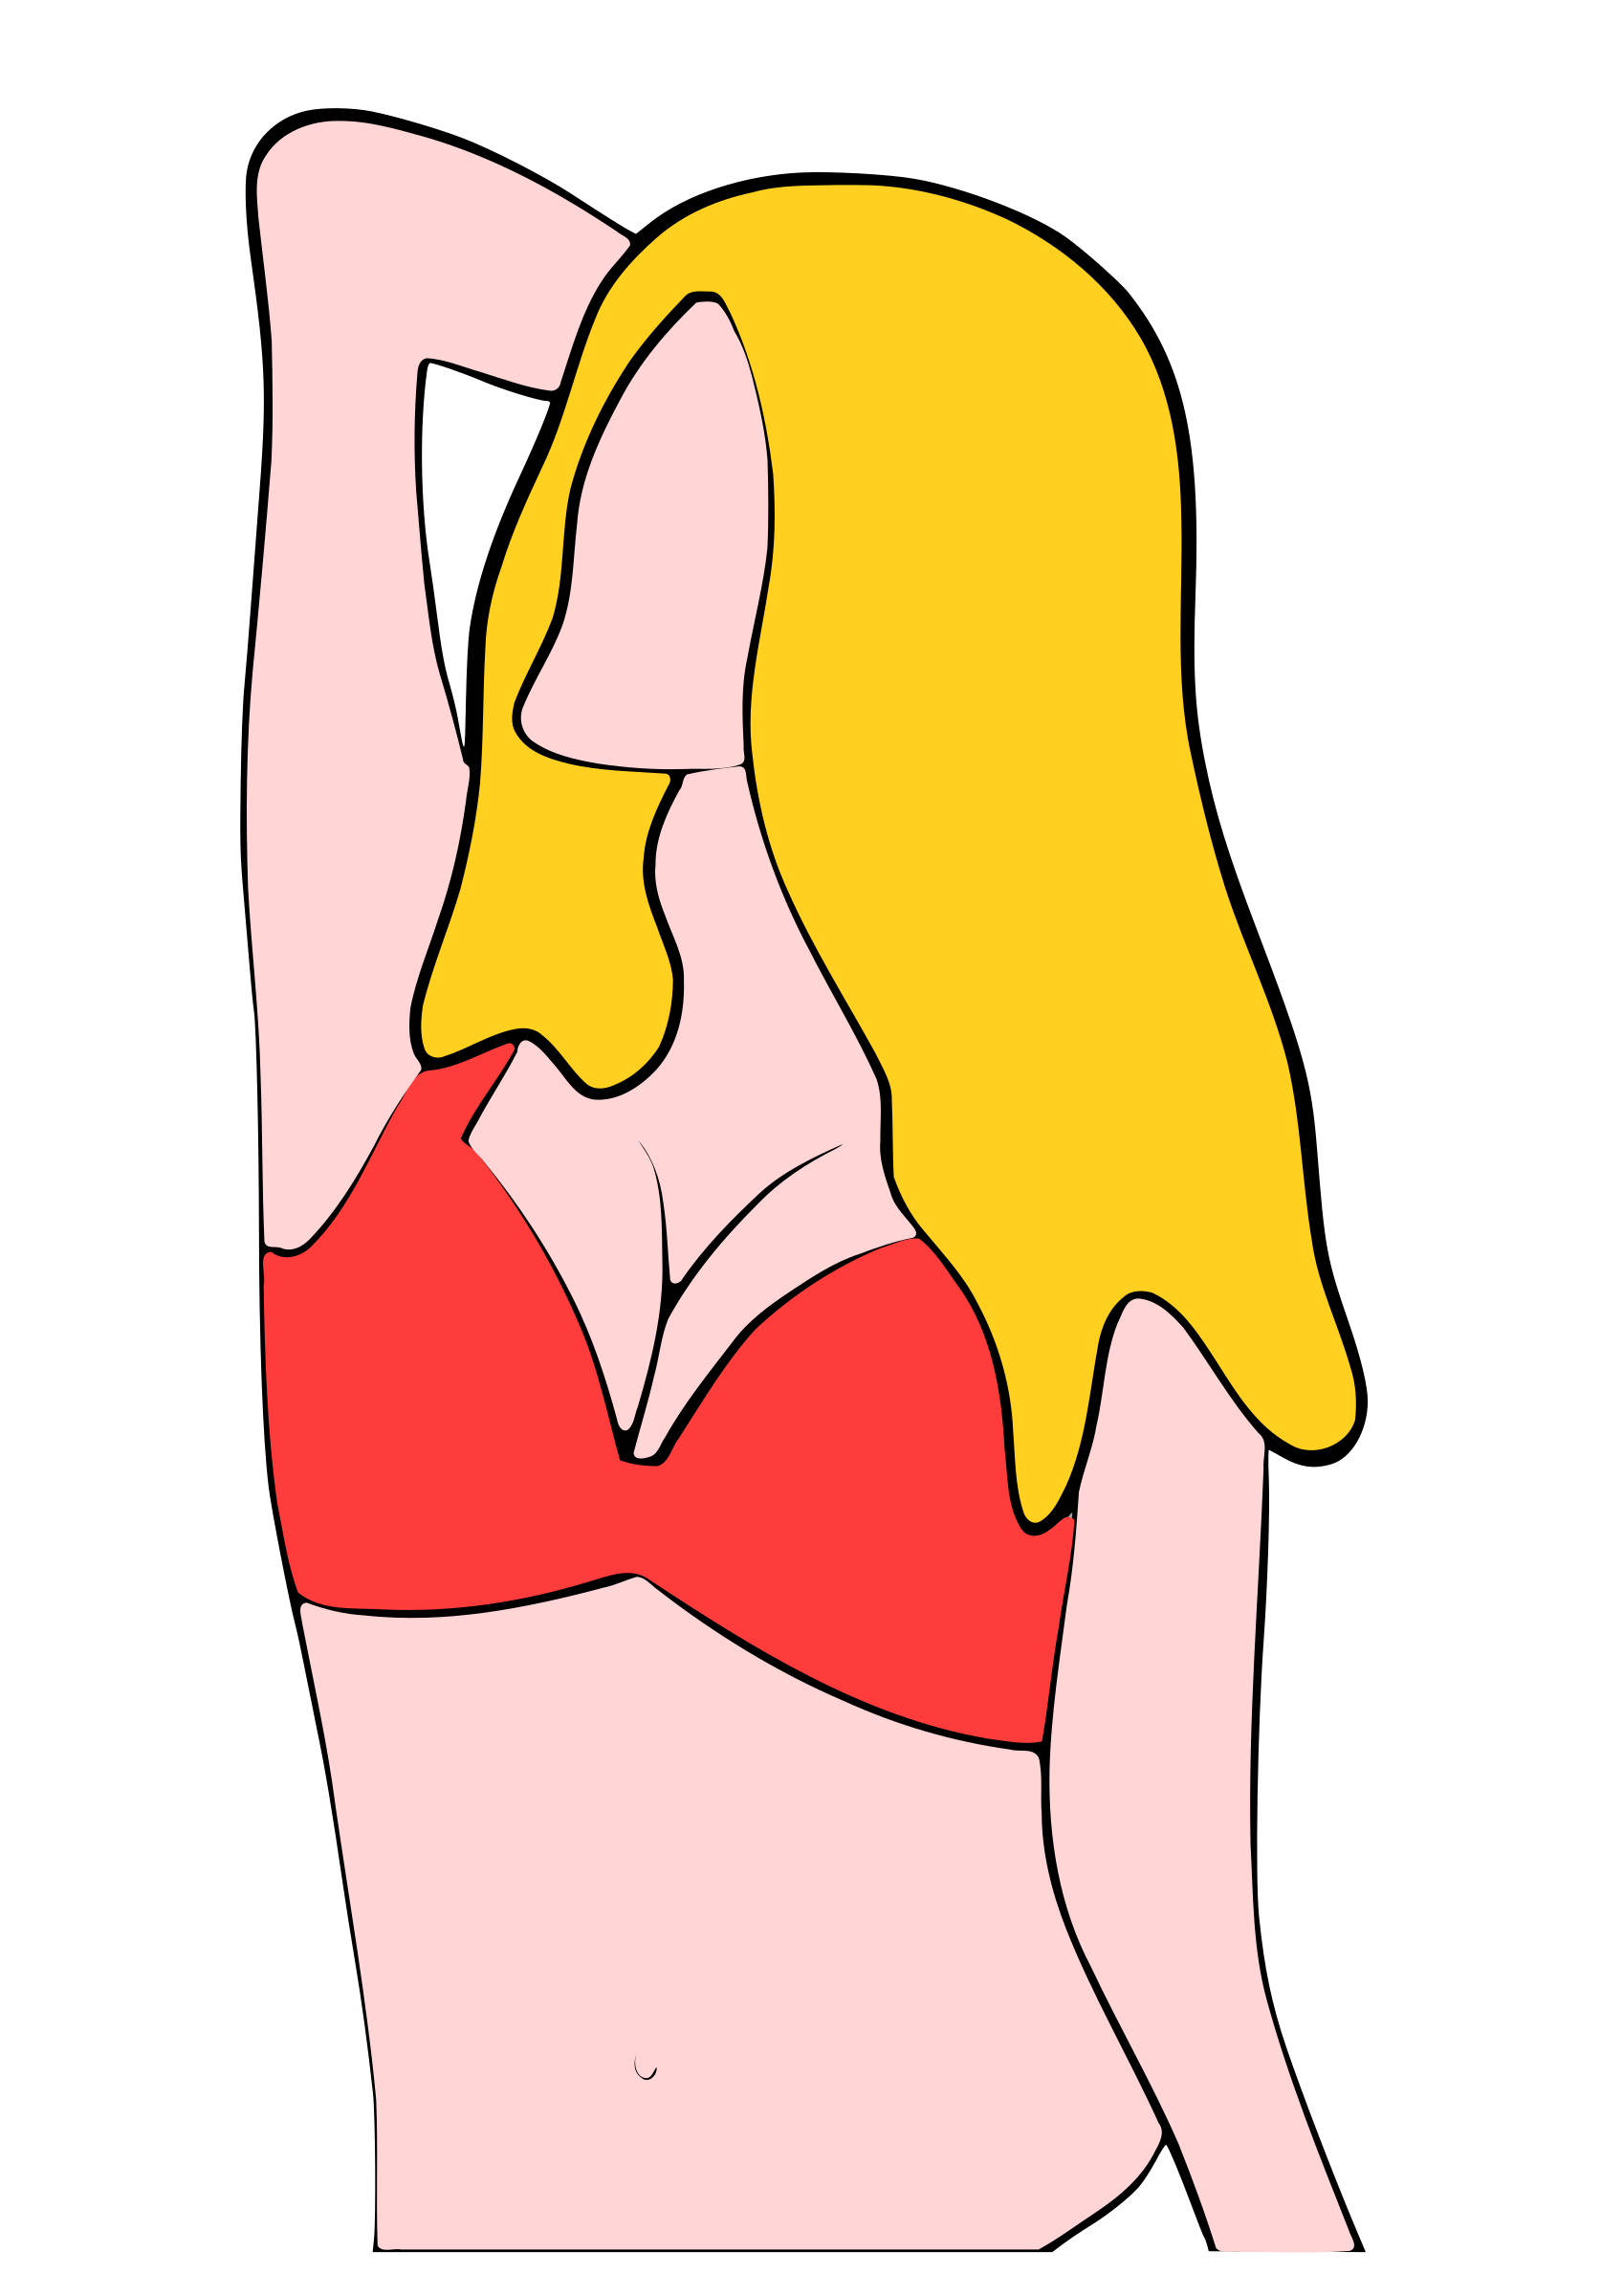 Ekg clipart cartoon. Torso woman in bikini